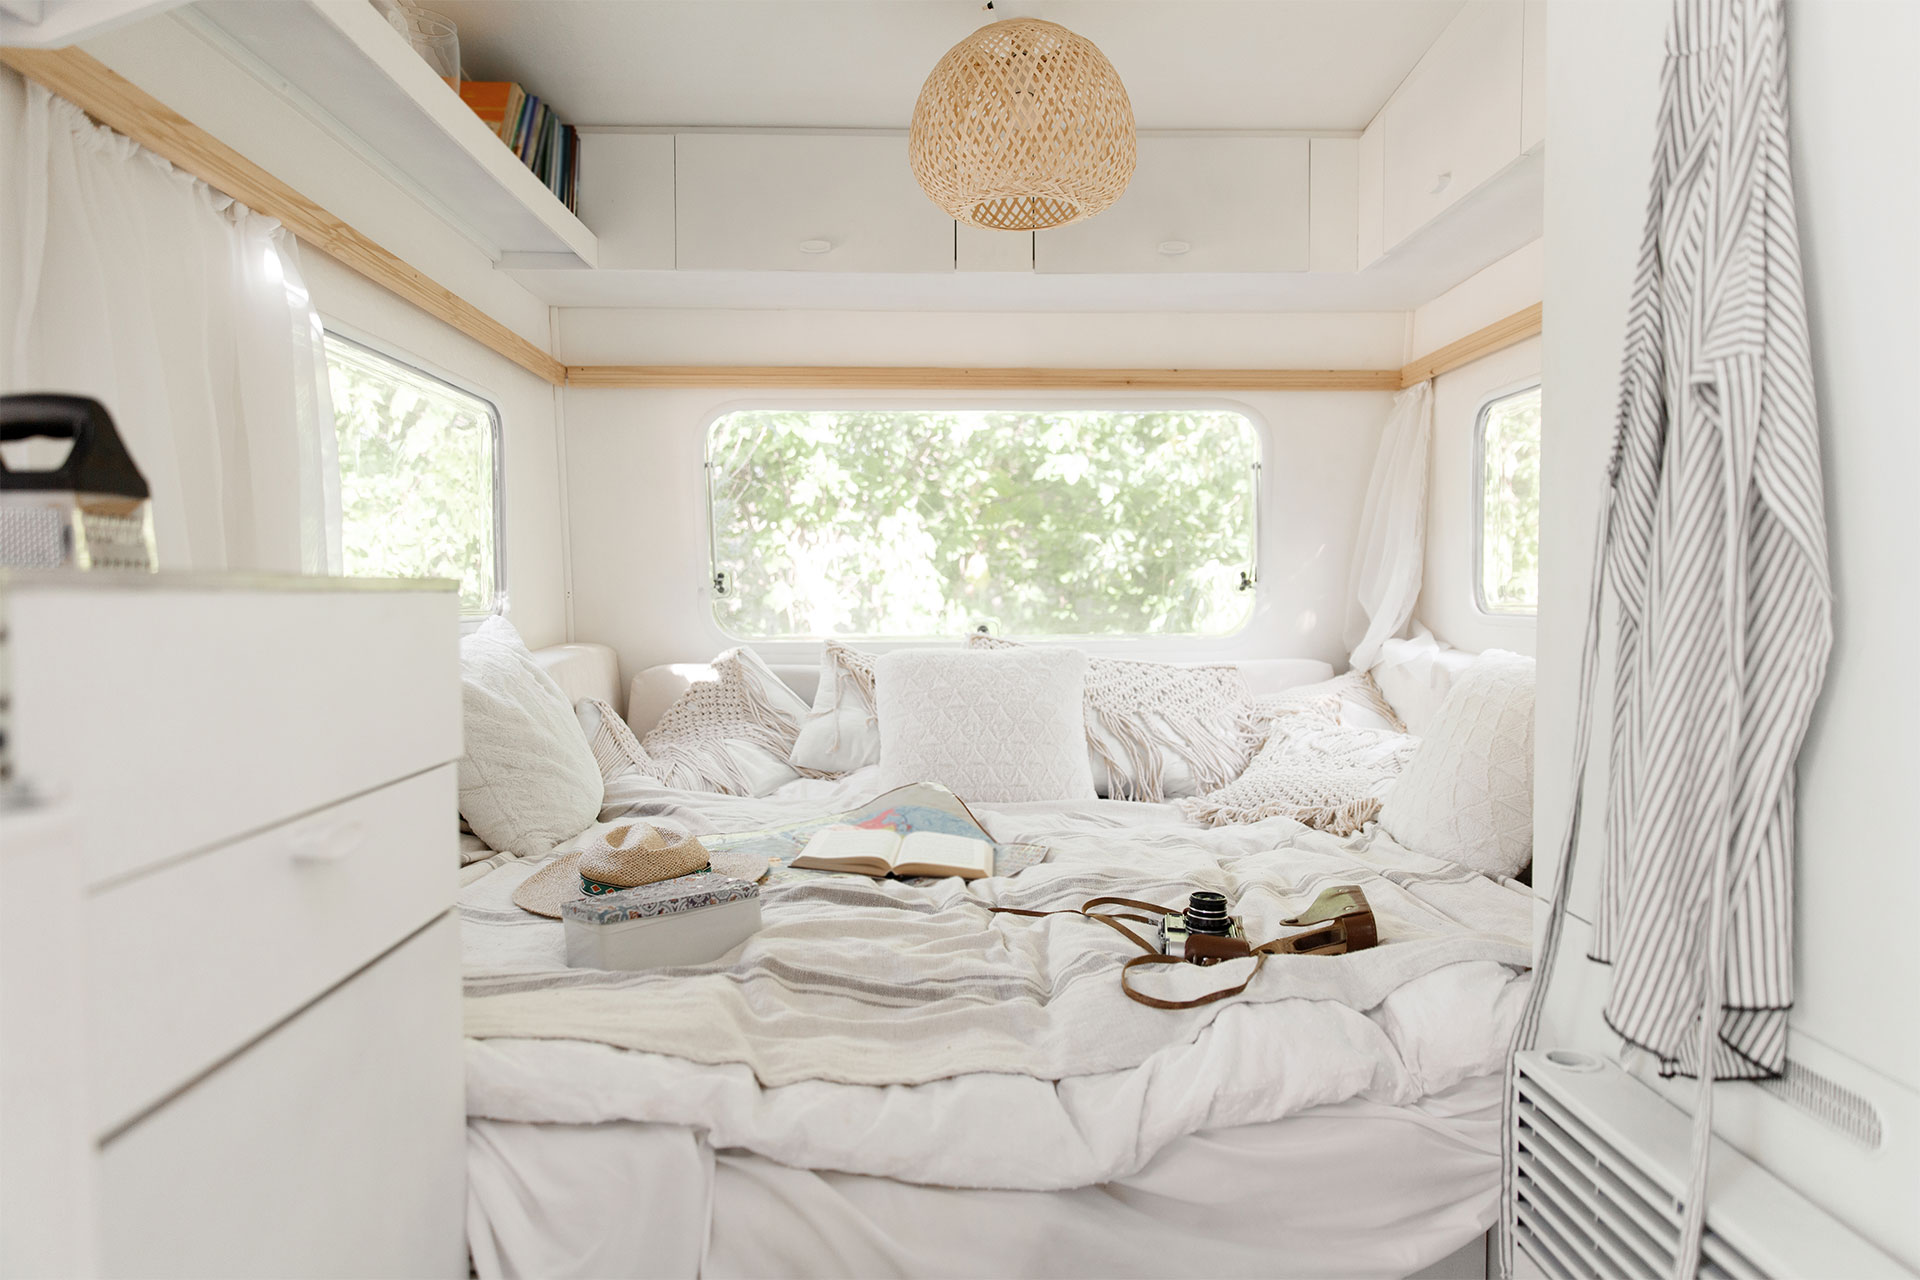 camping-in-a-trailer-rv-bedroom-interior-nobody-2021-08-29-19-22-24-XFF5LJM